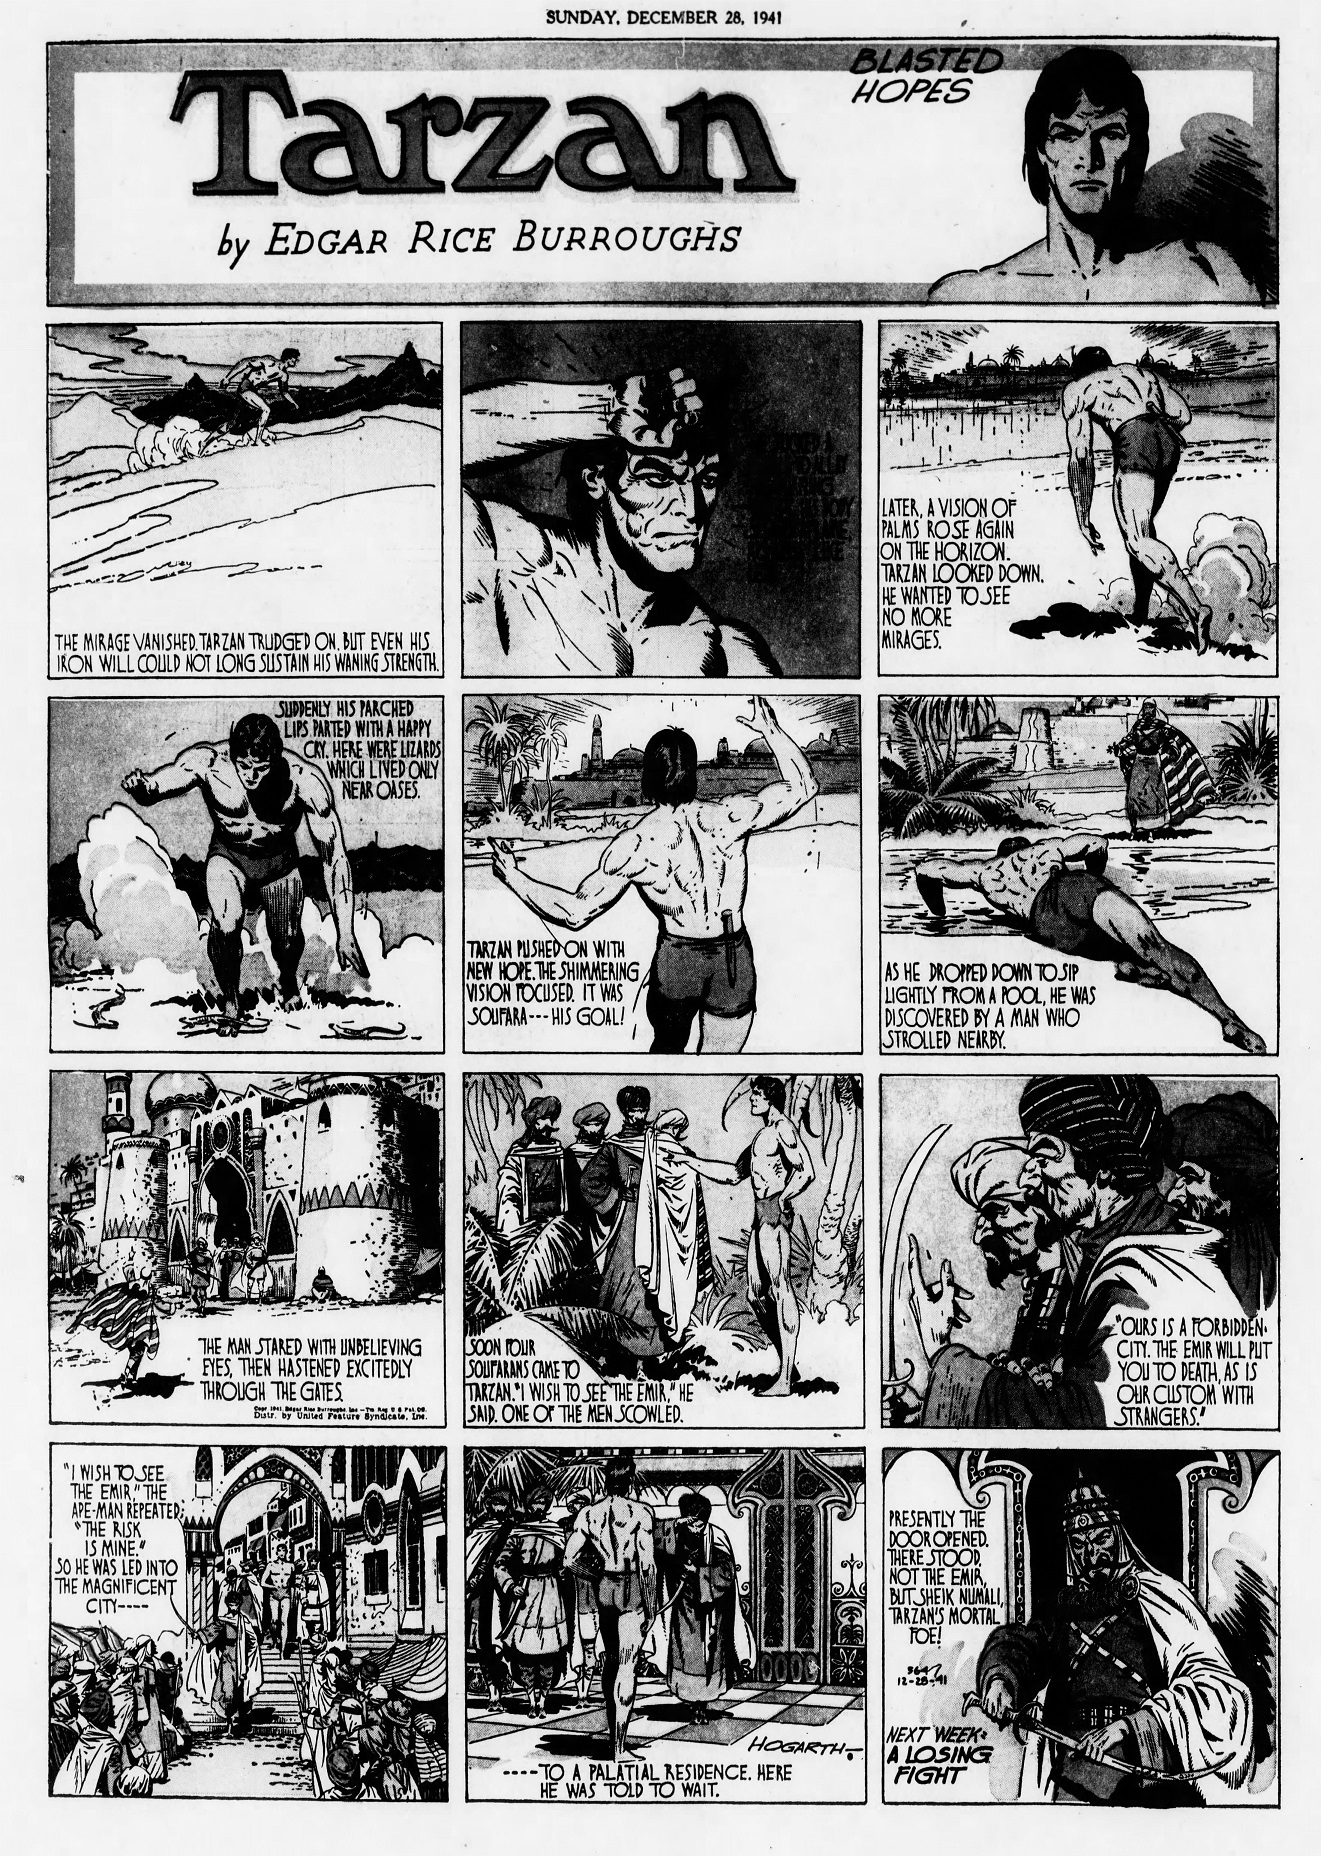 The_Brooklyn_Daily_Eagle_Sun__Dec_28__1941_(9).jpg